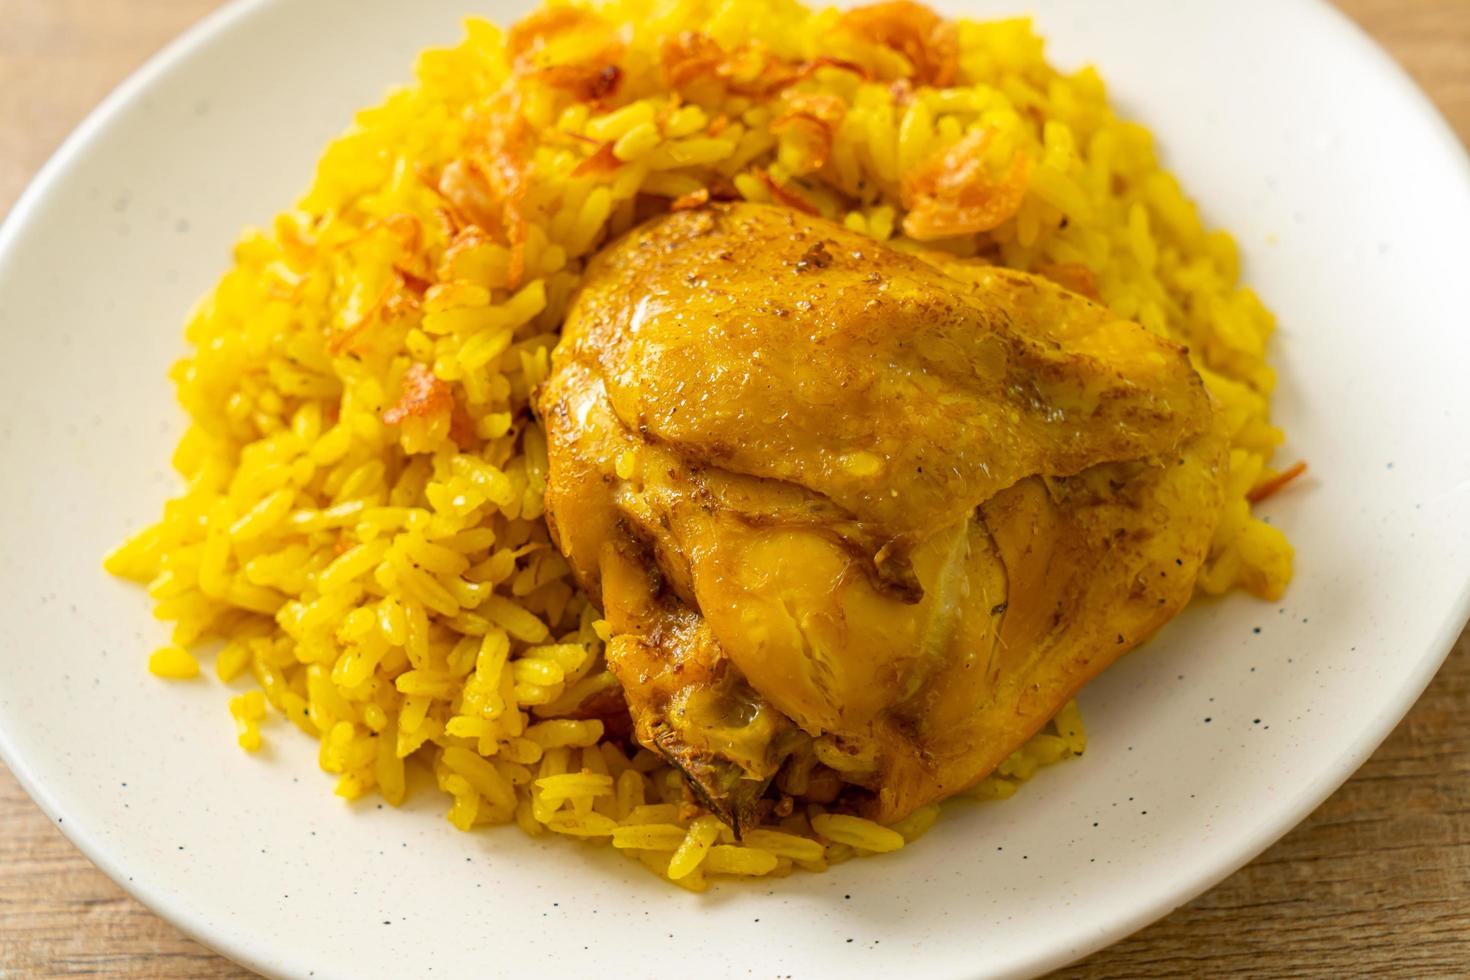 Chicken Biryani or Curried rice and chicken - Thai-Muslim version of Indian biryani, with fragrant yellow rice and chicken photo